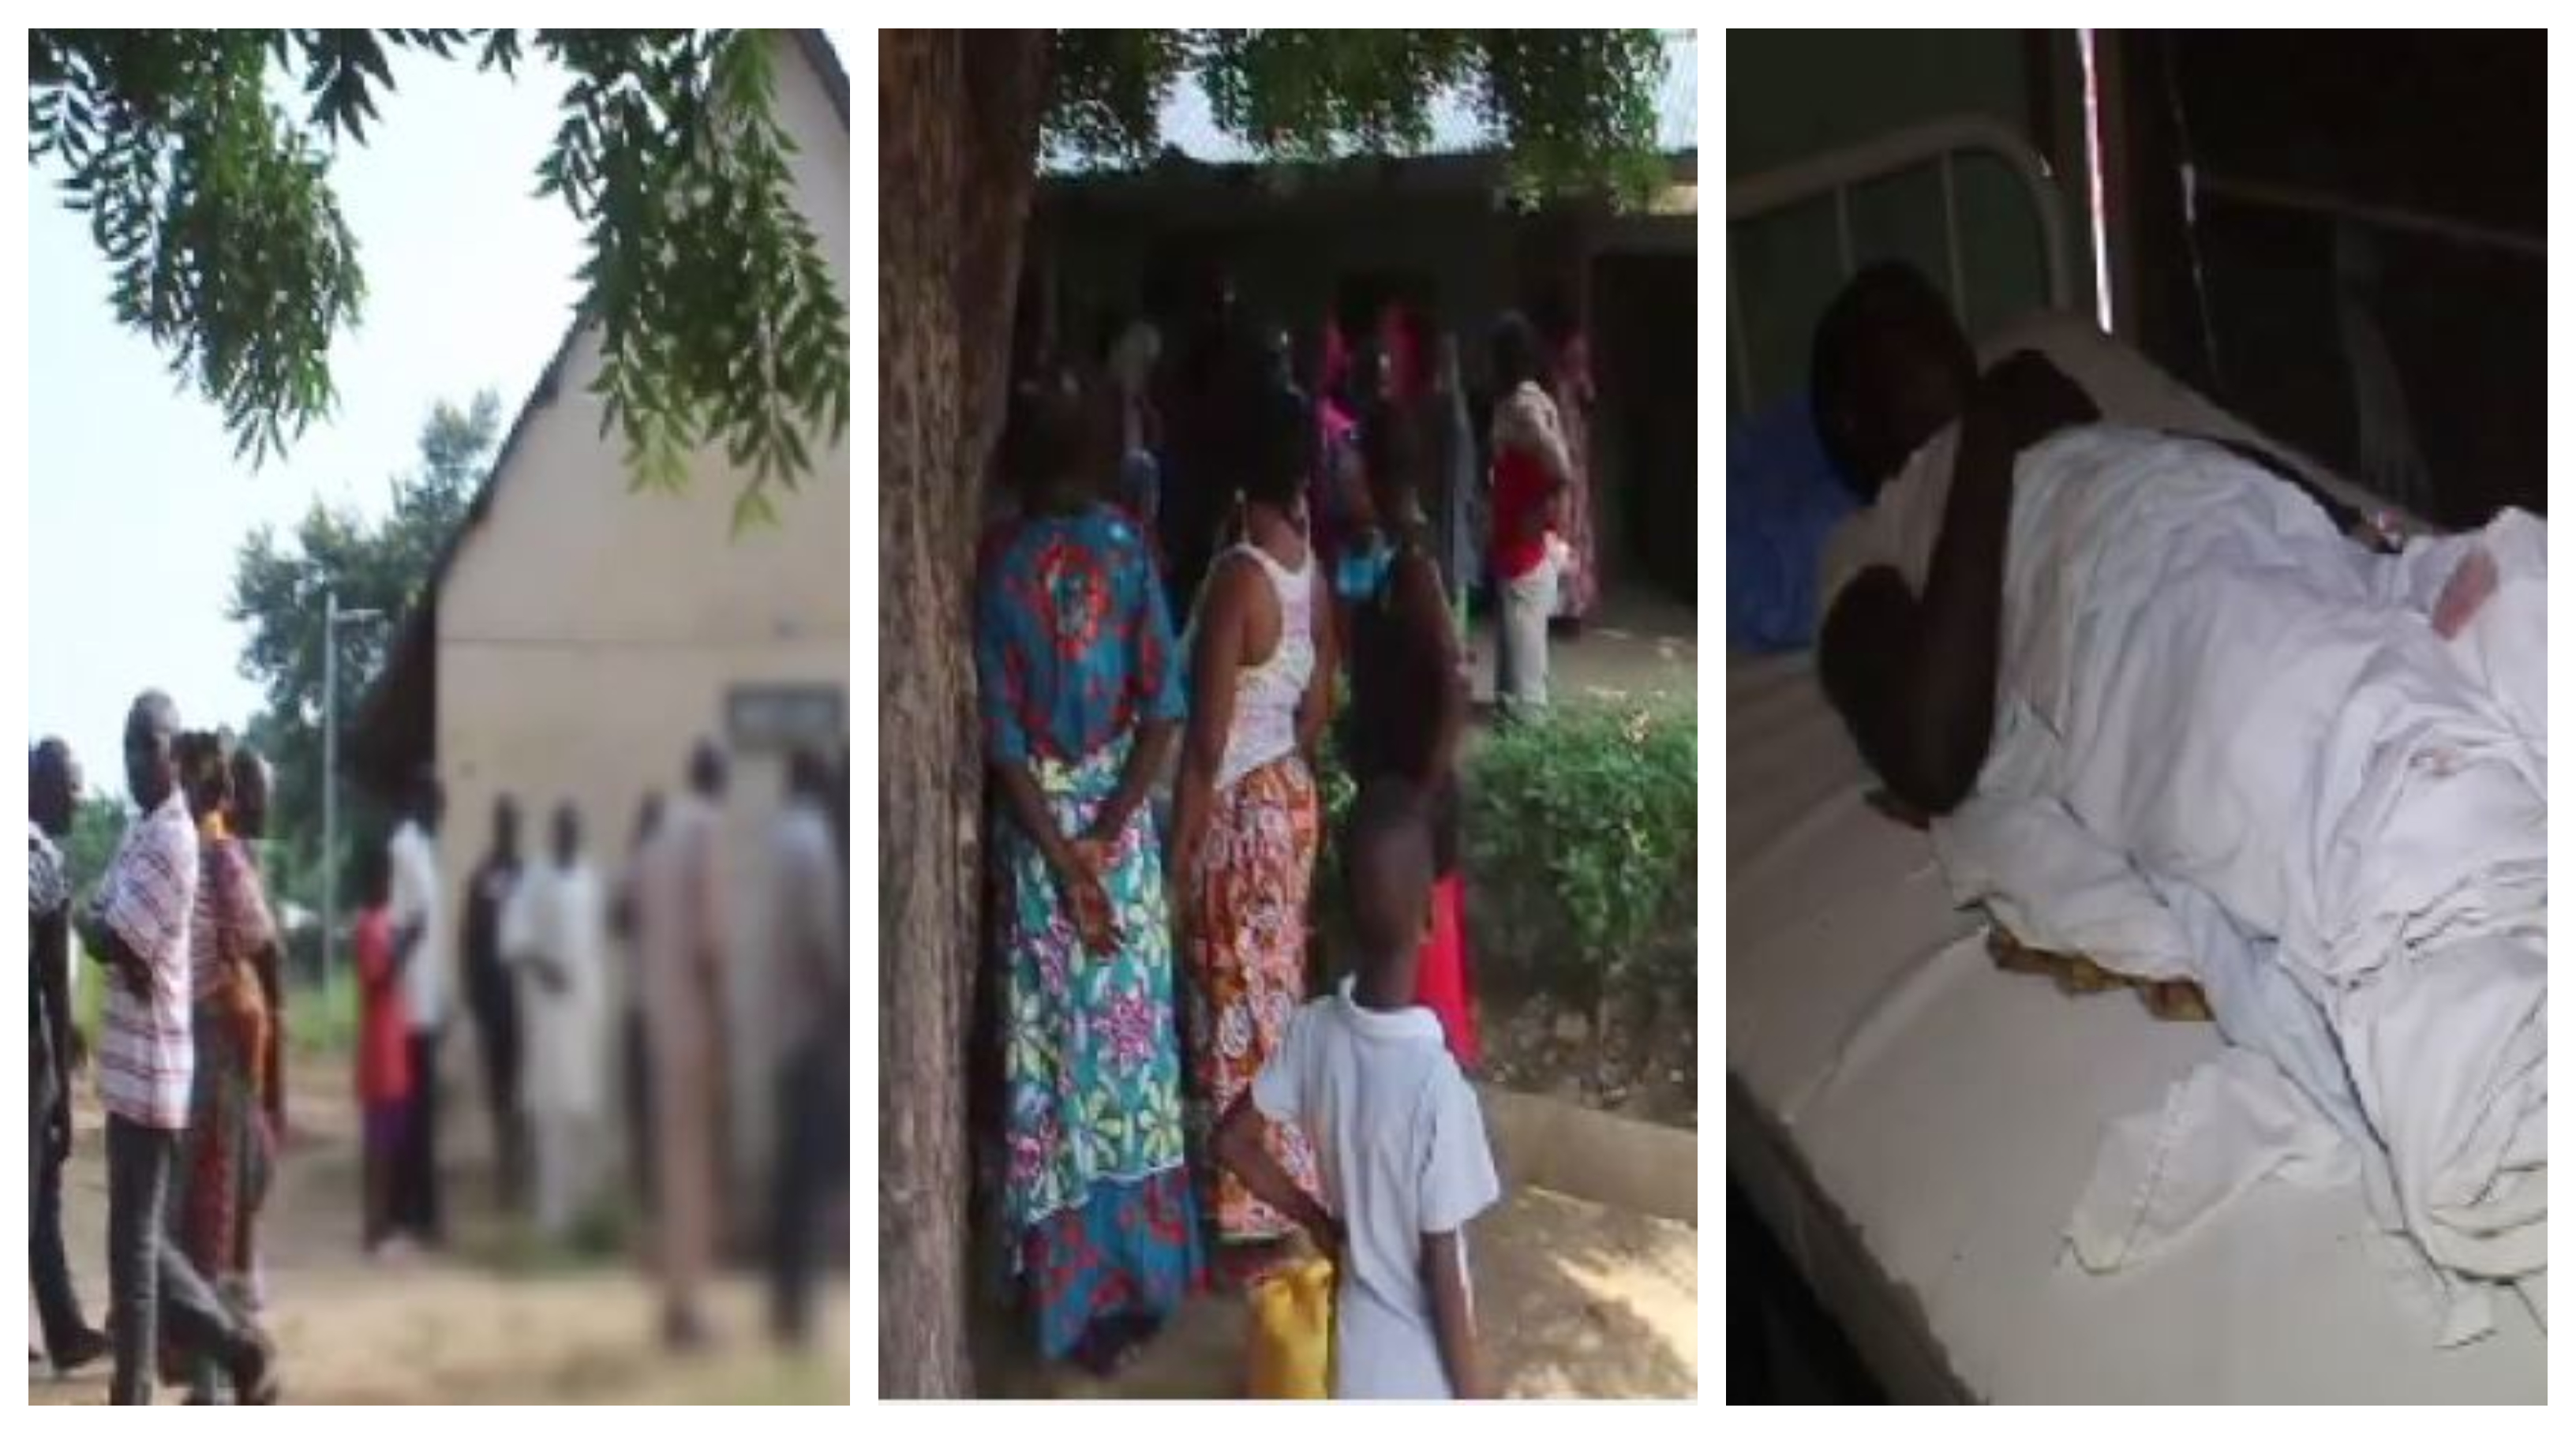 Adamawa police, residents of Numan LGA disagree over attackers’ identity